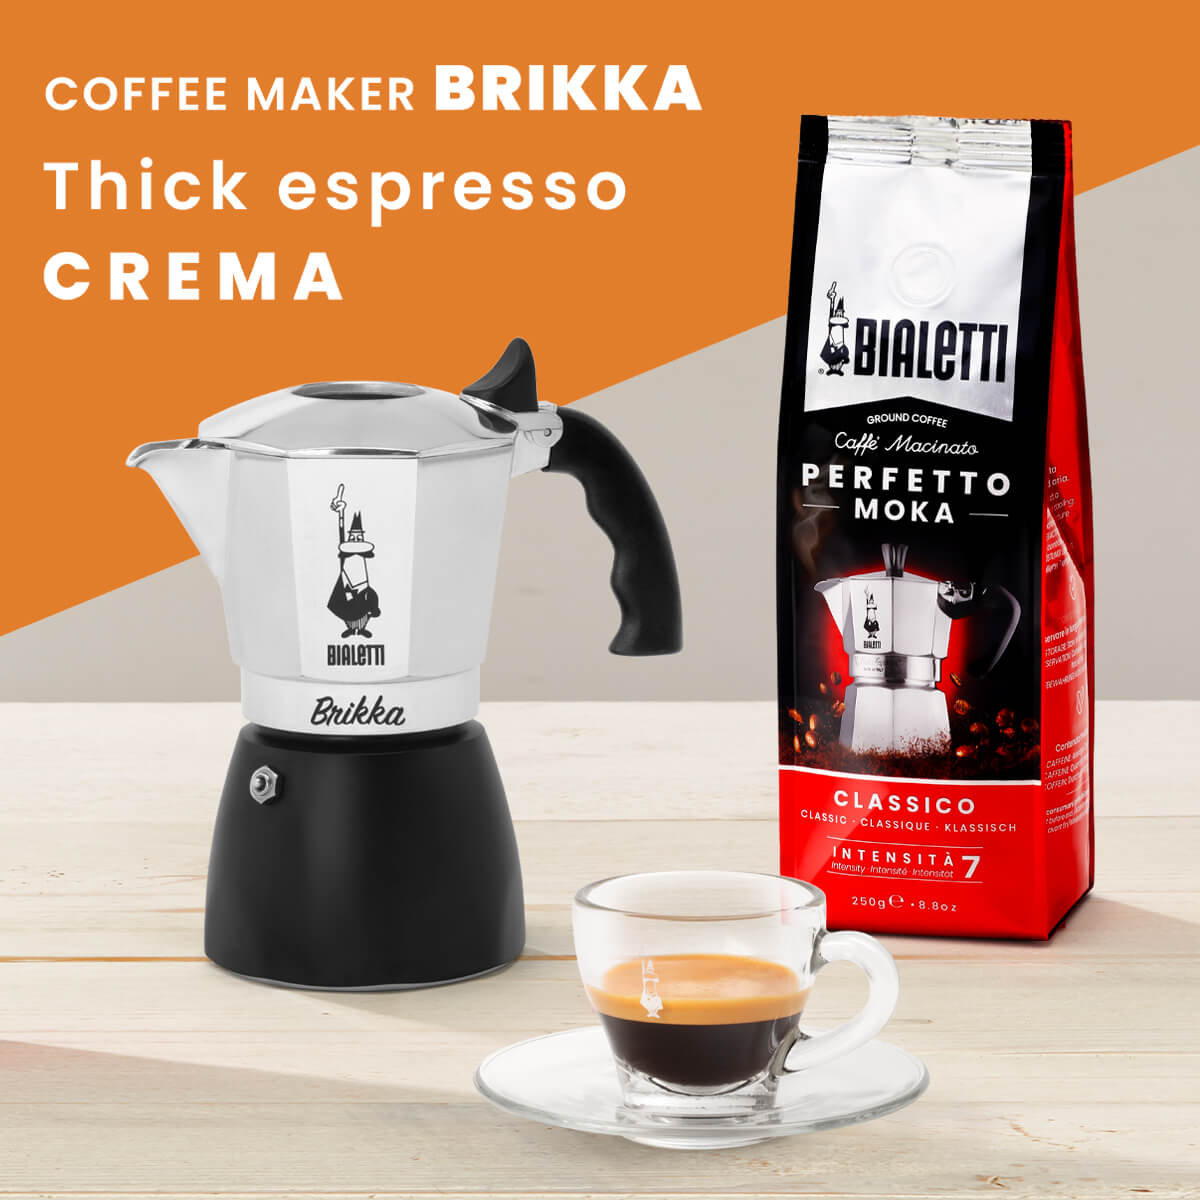 Brikka coffee maker and moka ground italian coffee